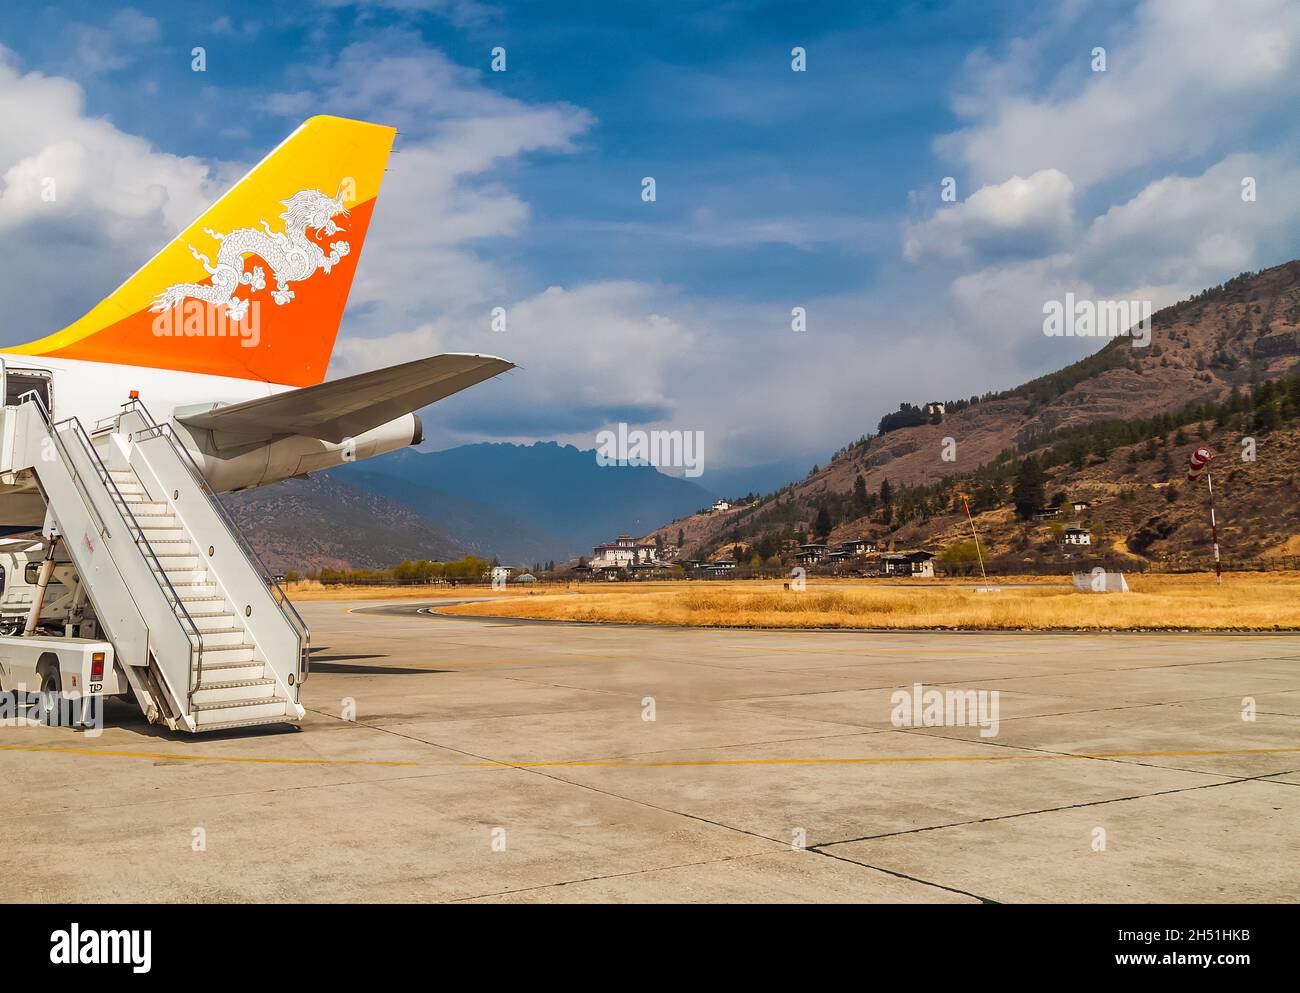 Paro/ Bhutan - February 26, 2016: Tail and ladder of Drukair - Royal Bhutan Airlines Airplane Airbus A319s in Paro Airport. Himalaya mountais and bhut Stock Photo